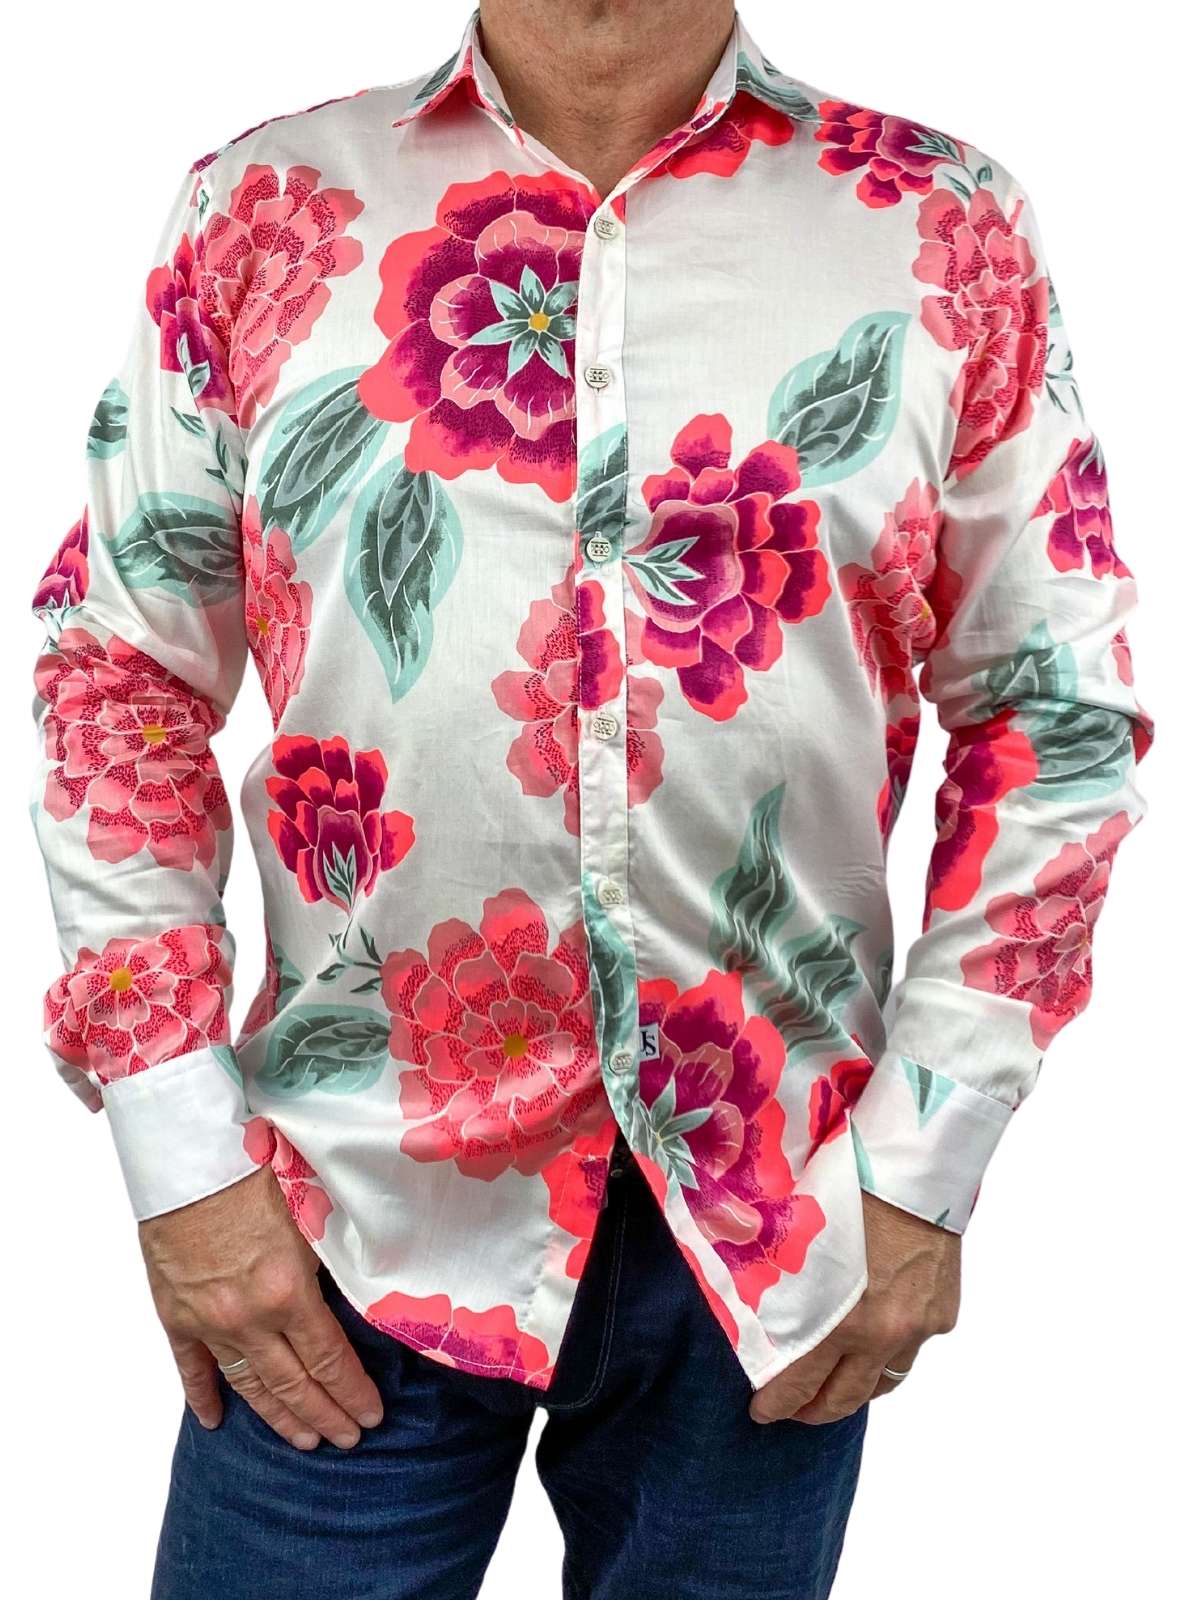 Ultra Floral Cotton/Rayon L/S Shirt - Pink